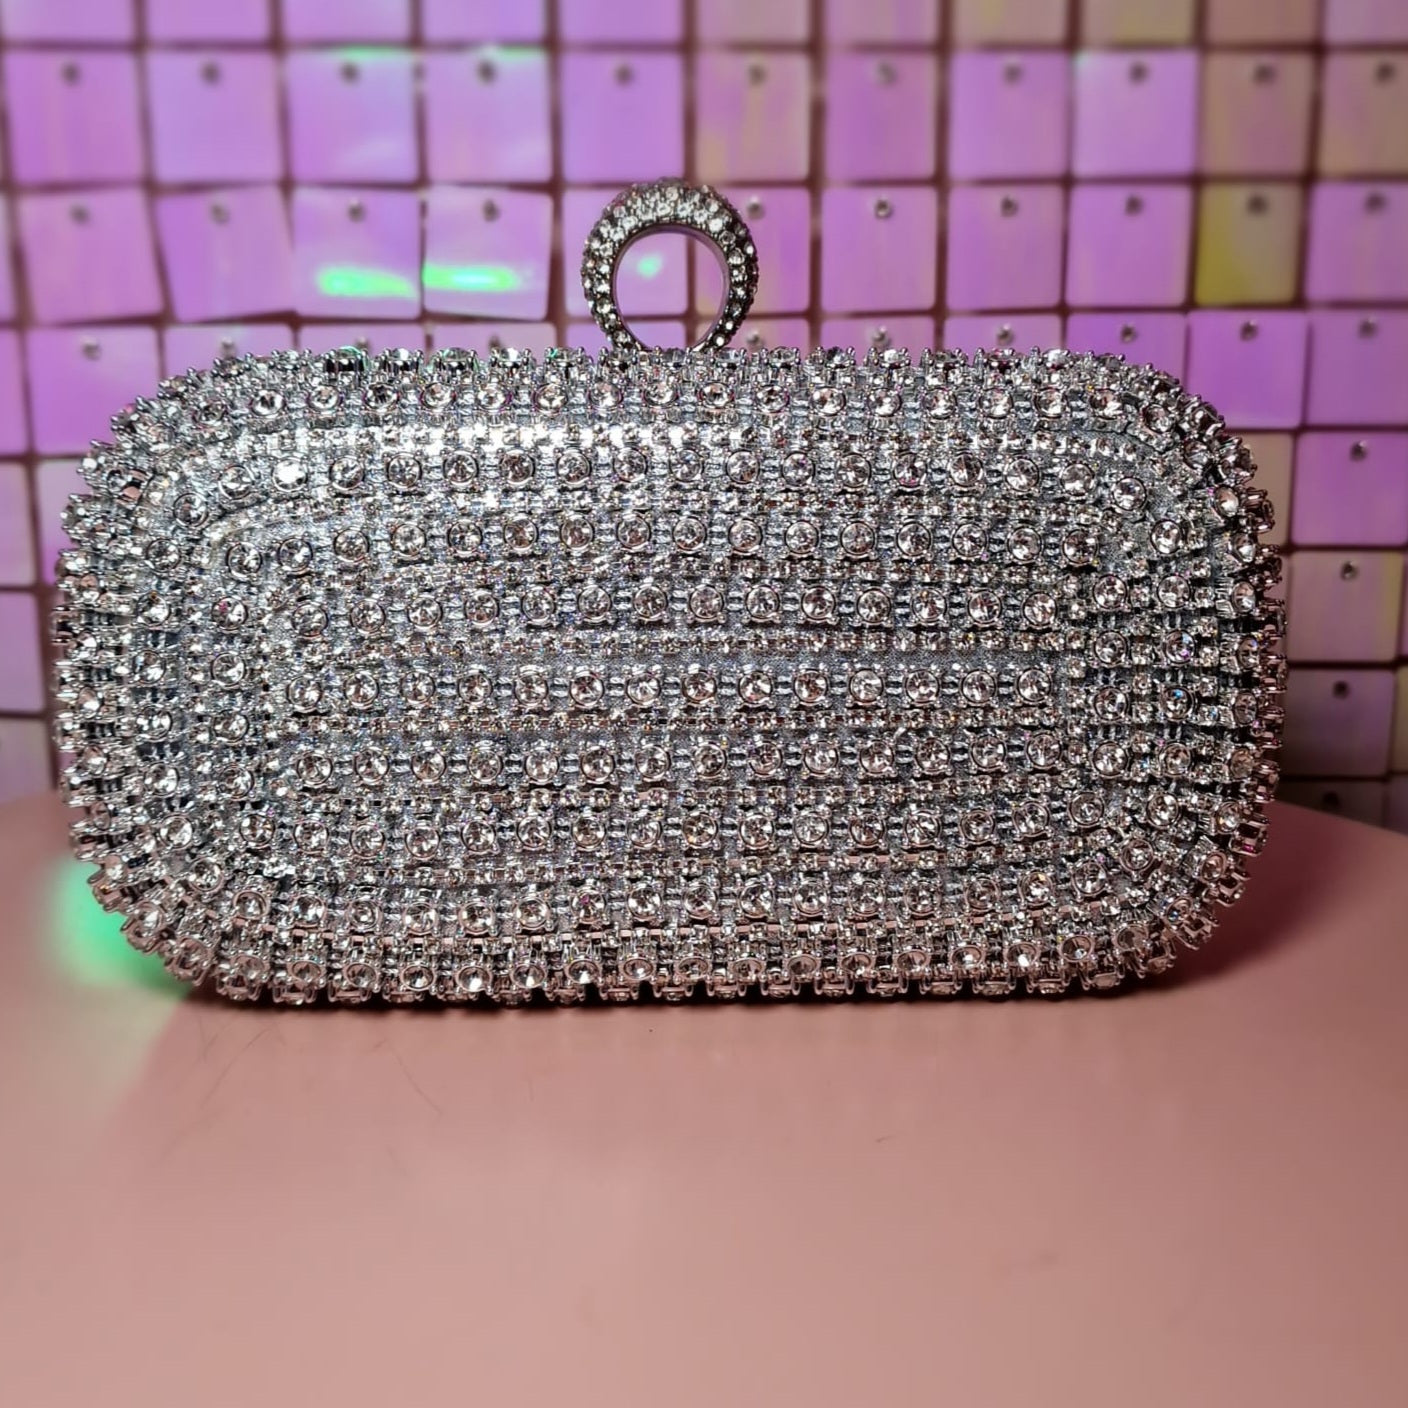 Silver Diamond And Rhinestone Clutch Handbag